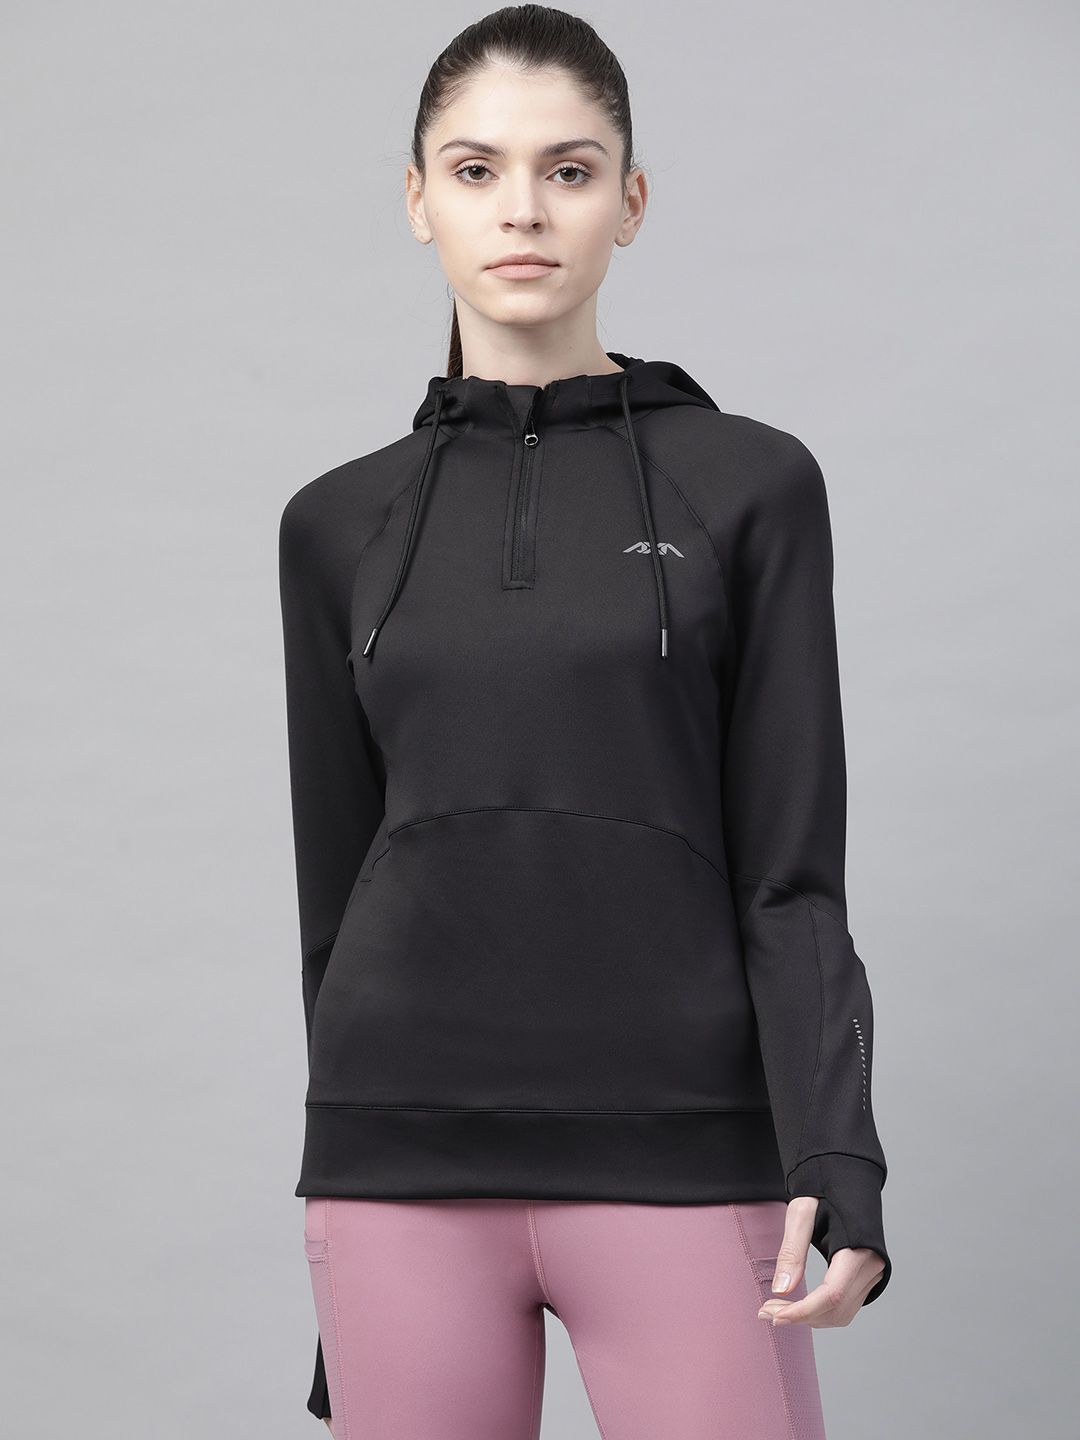 Alcis Women Black Solid Hooded Sweatshirt Price in India